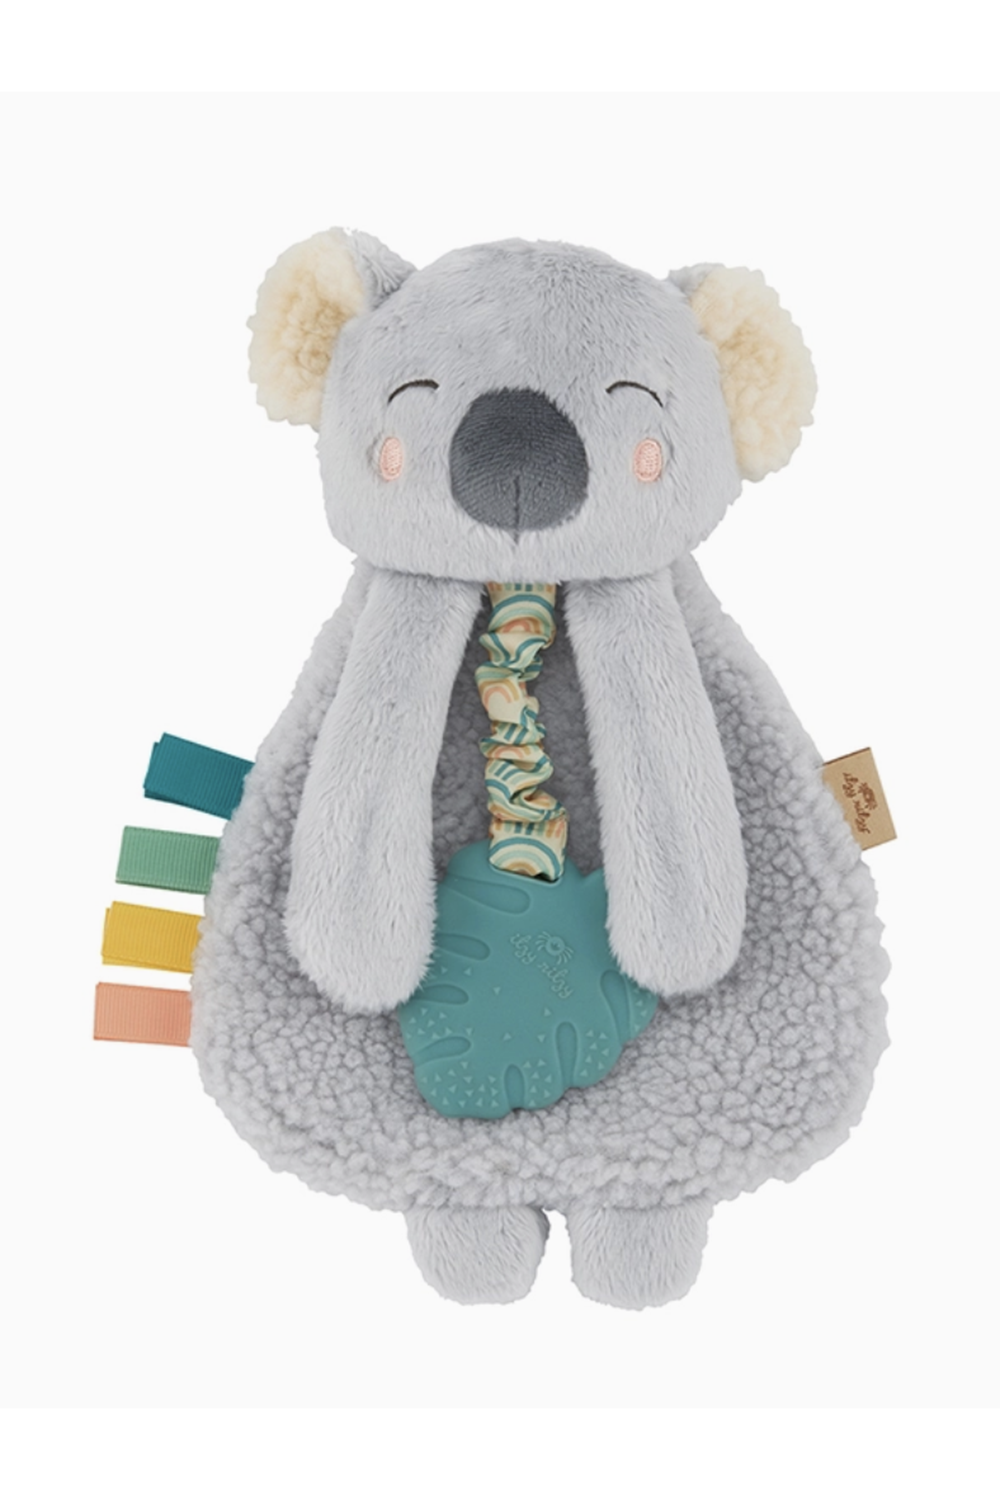 Lovey with Teether Toy - Kayden Koala